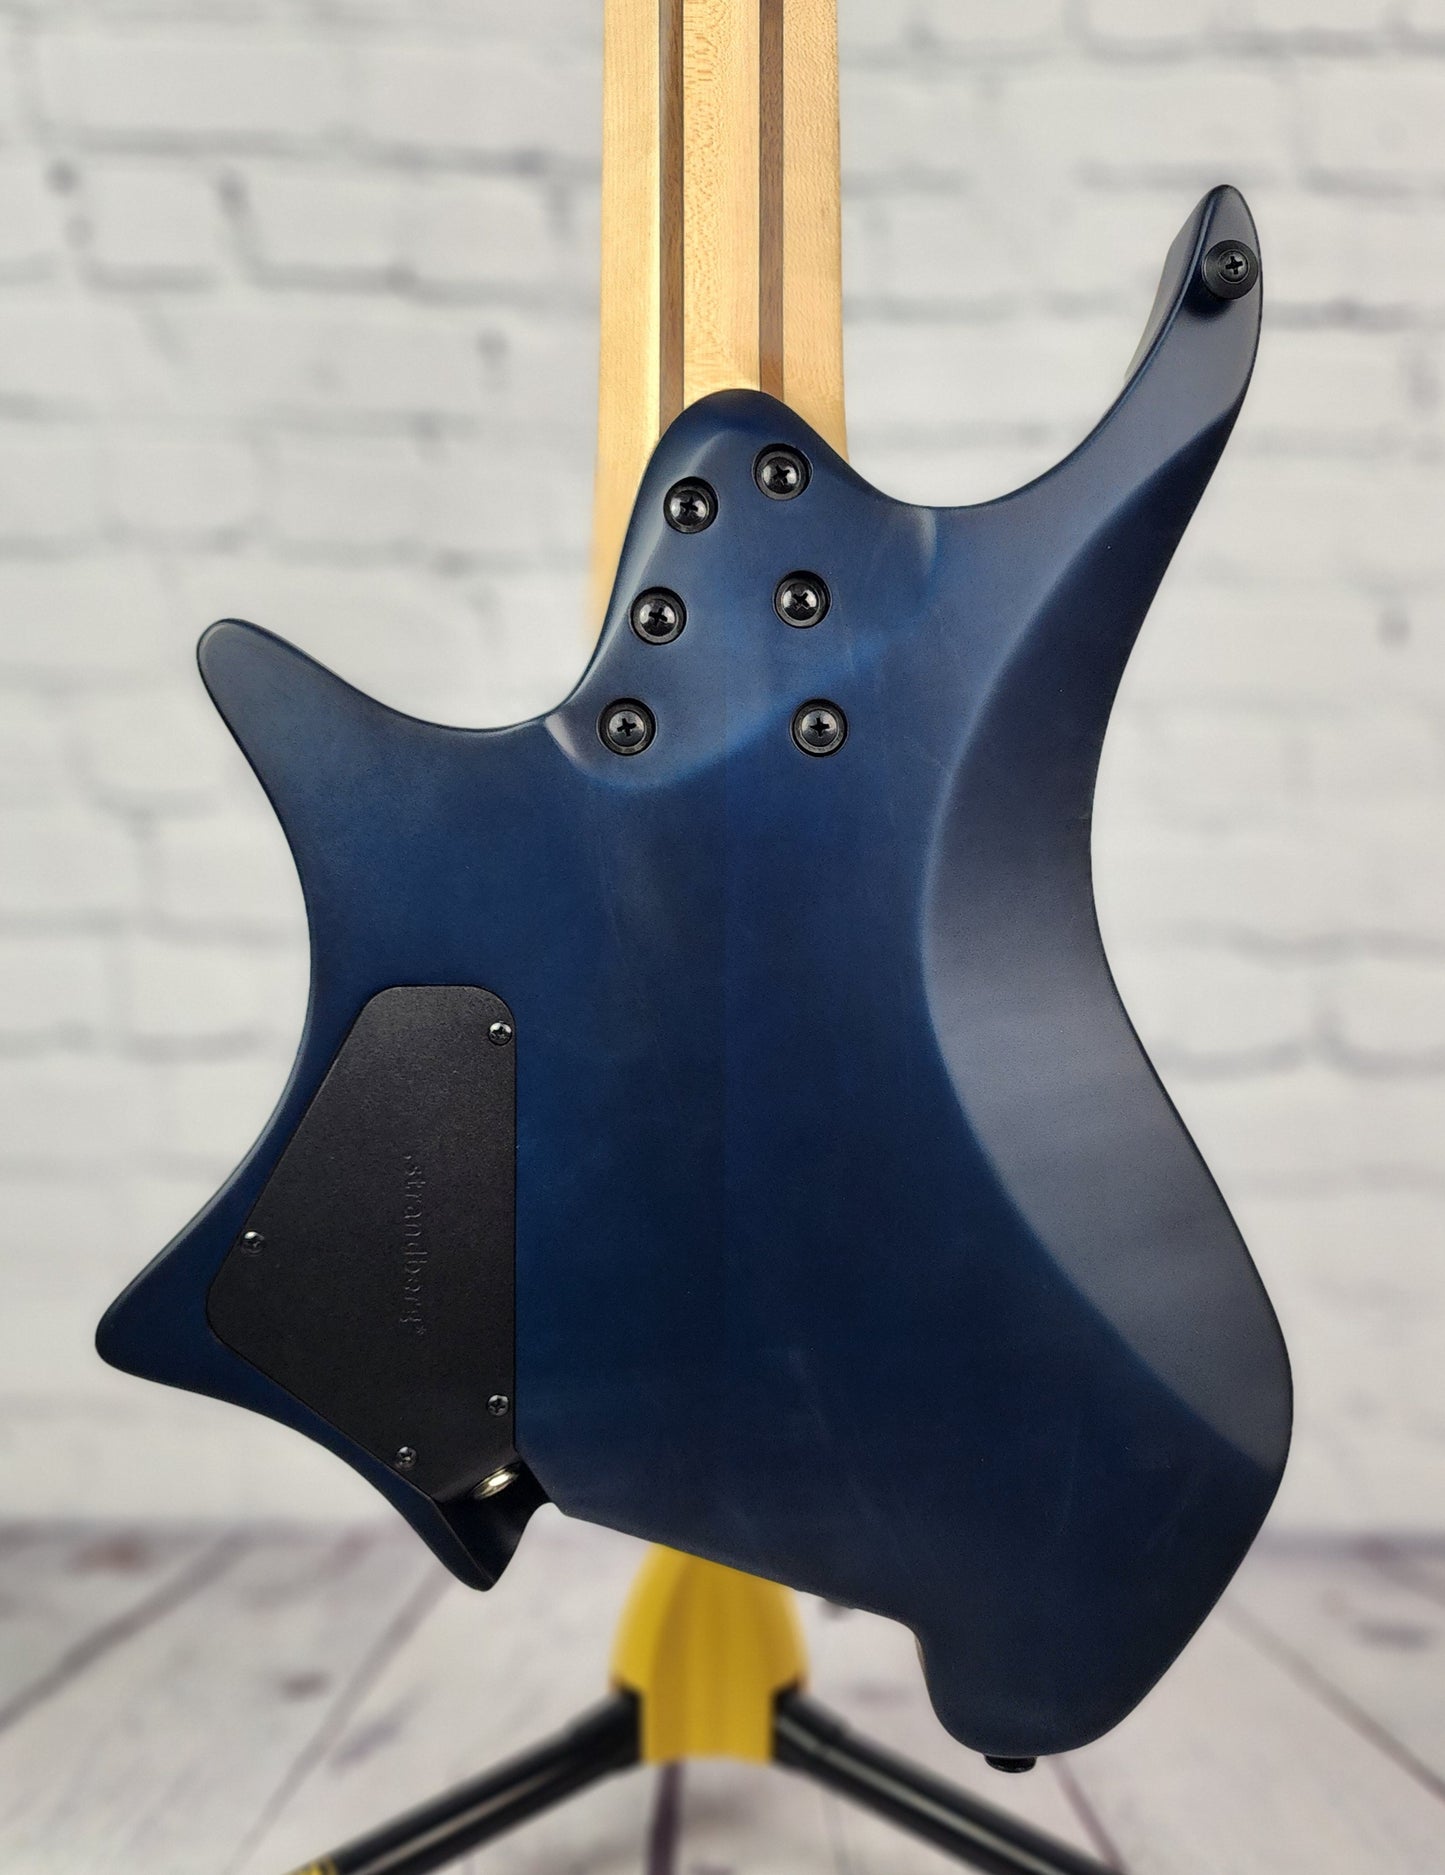 Strandberg Boden Standard NX 8 String Electric Guitar Trans Blue